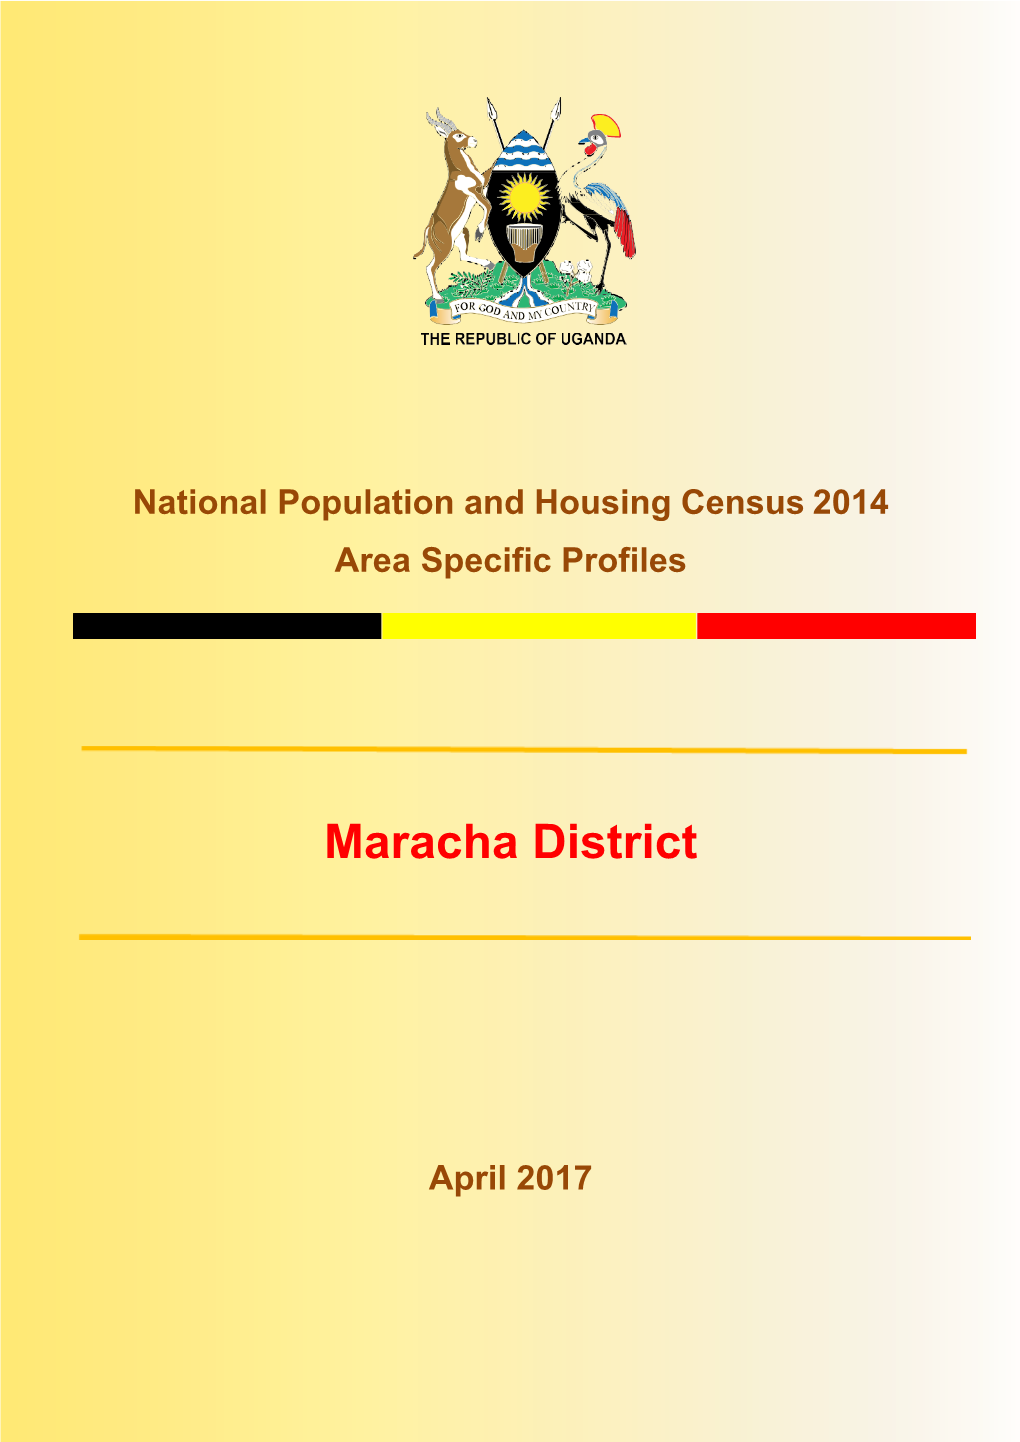 Maracha District